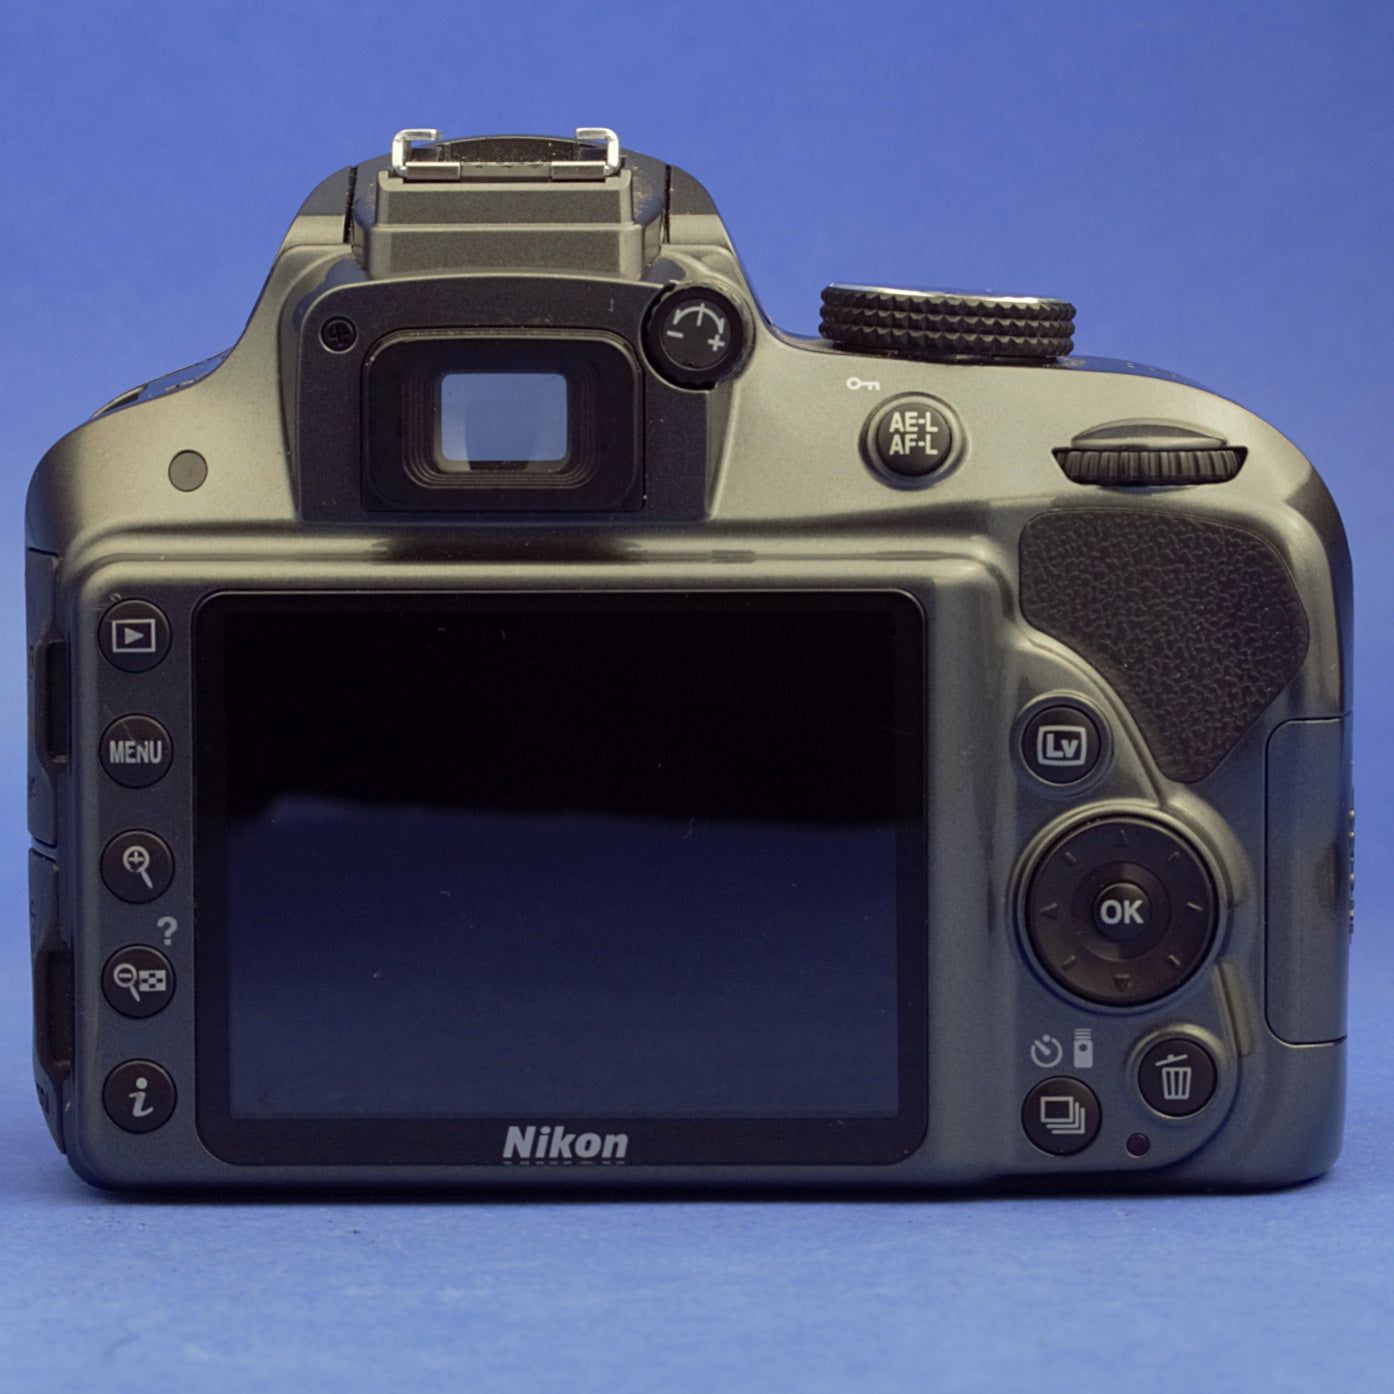 Nikon D3300 Digital Camera Body Gray Color